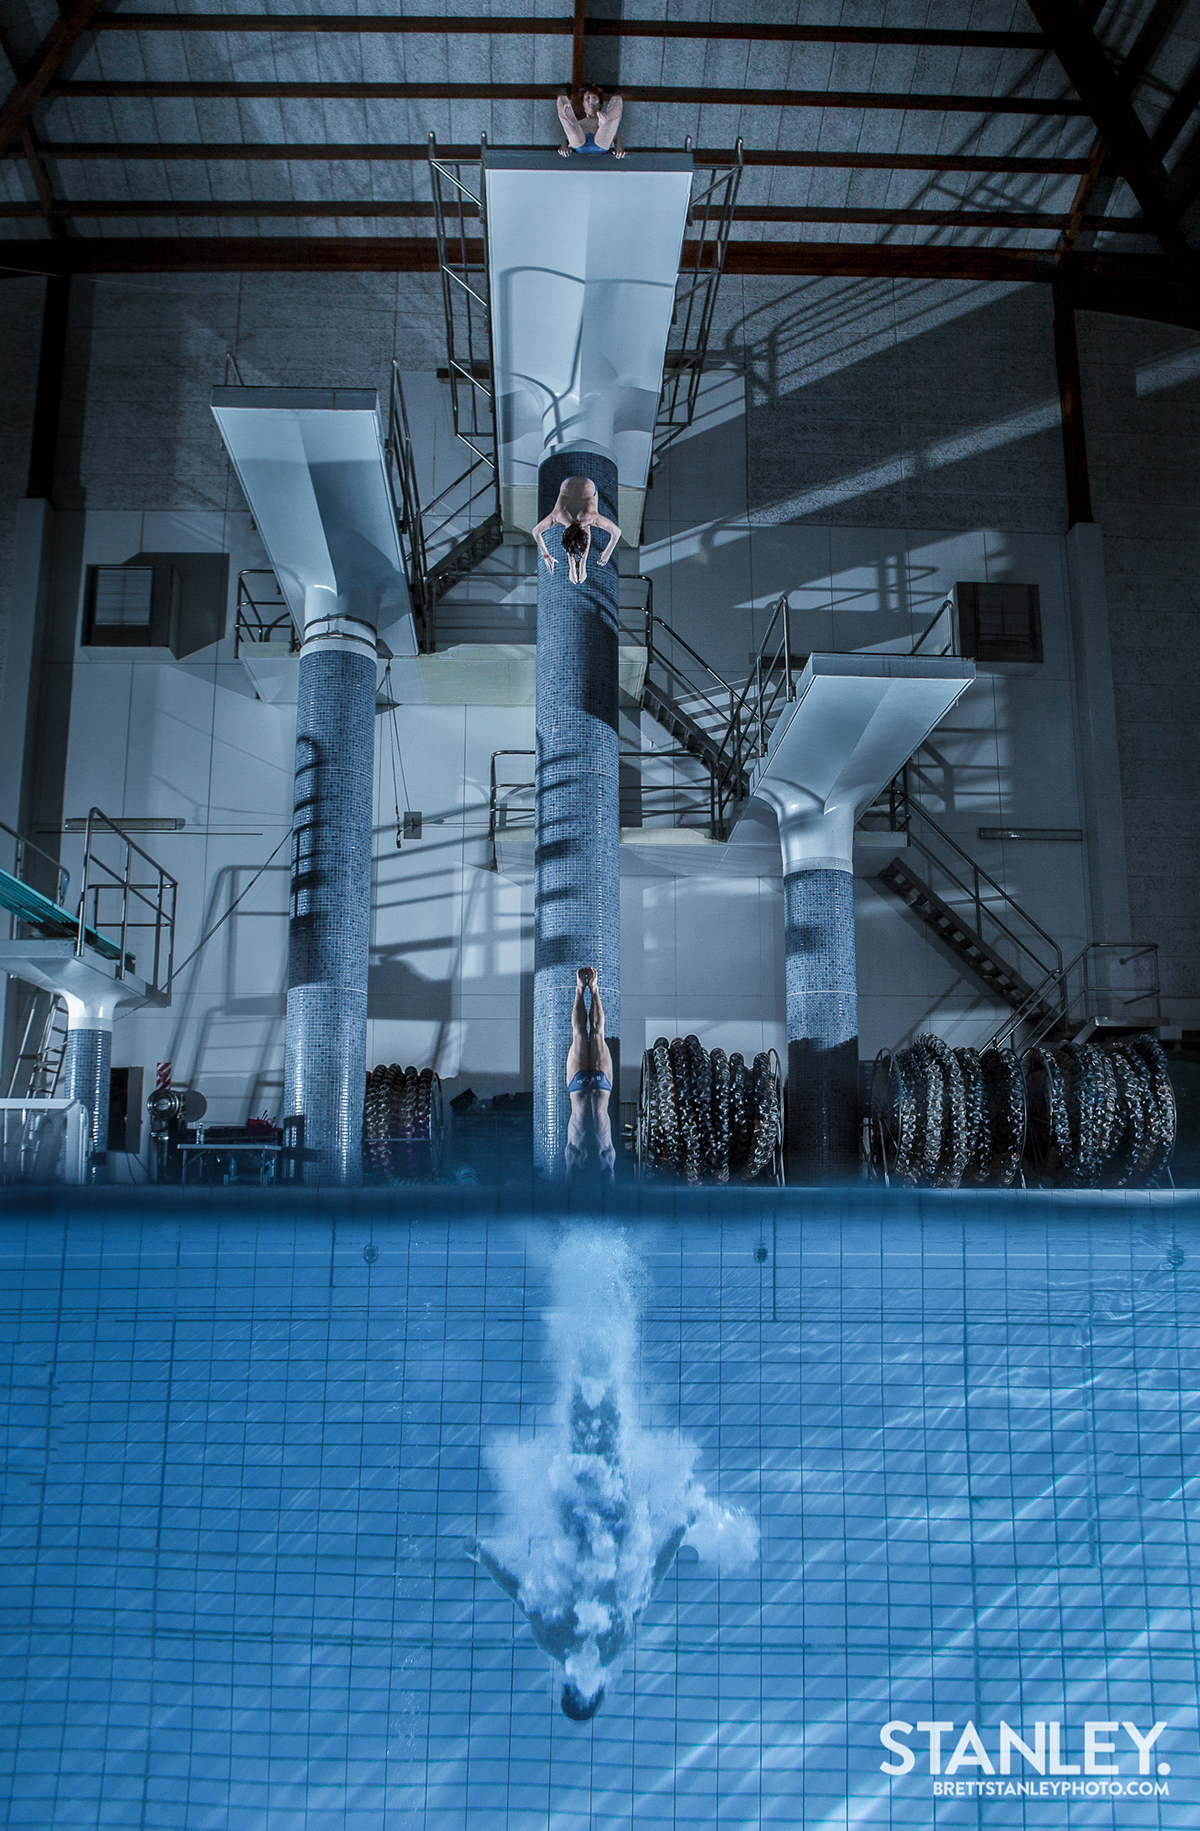 sport diving Watersports water motion freezeframe photoshop wellington New Zealand brett stanley olympic Olympian li feng yang